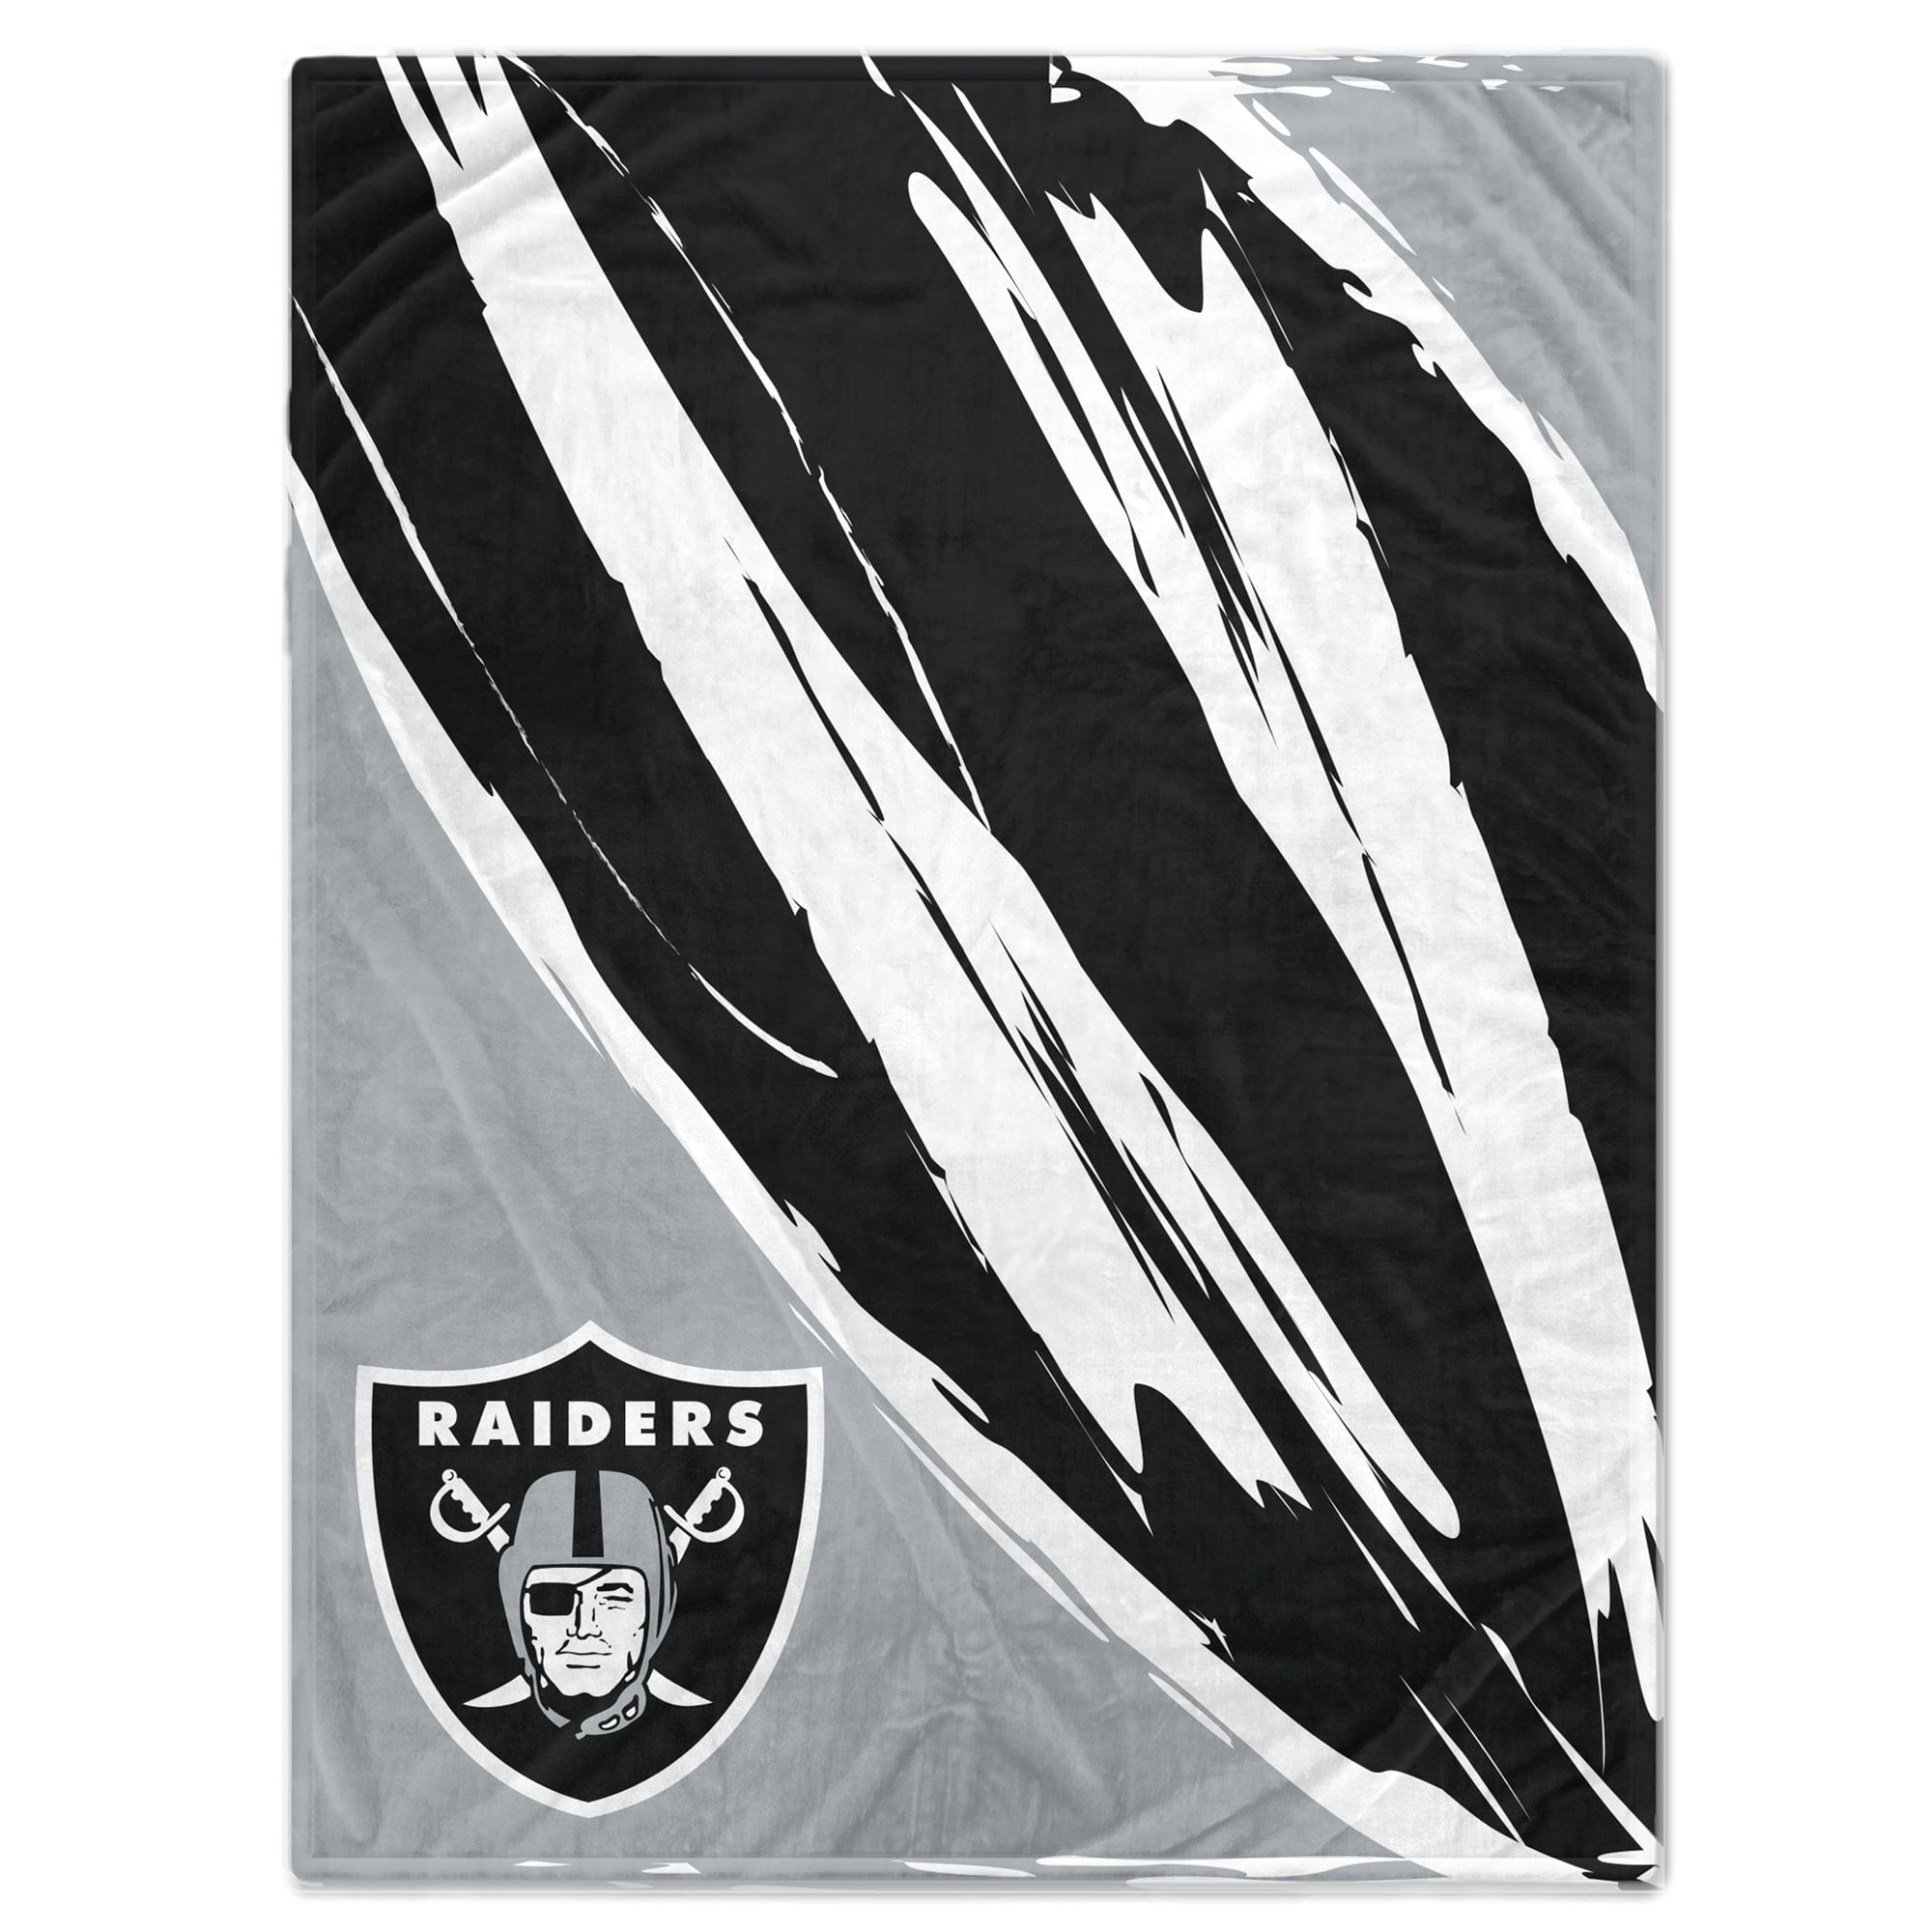 60th Anniversary 1960-2020 Raider For Fans Fleece Blanket 